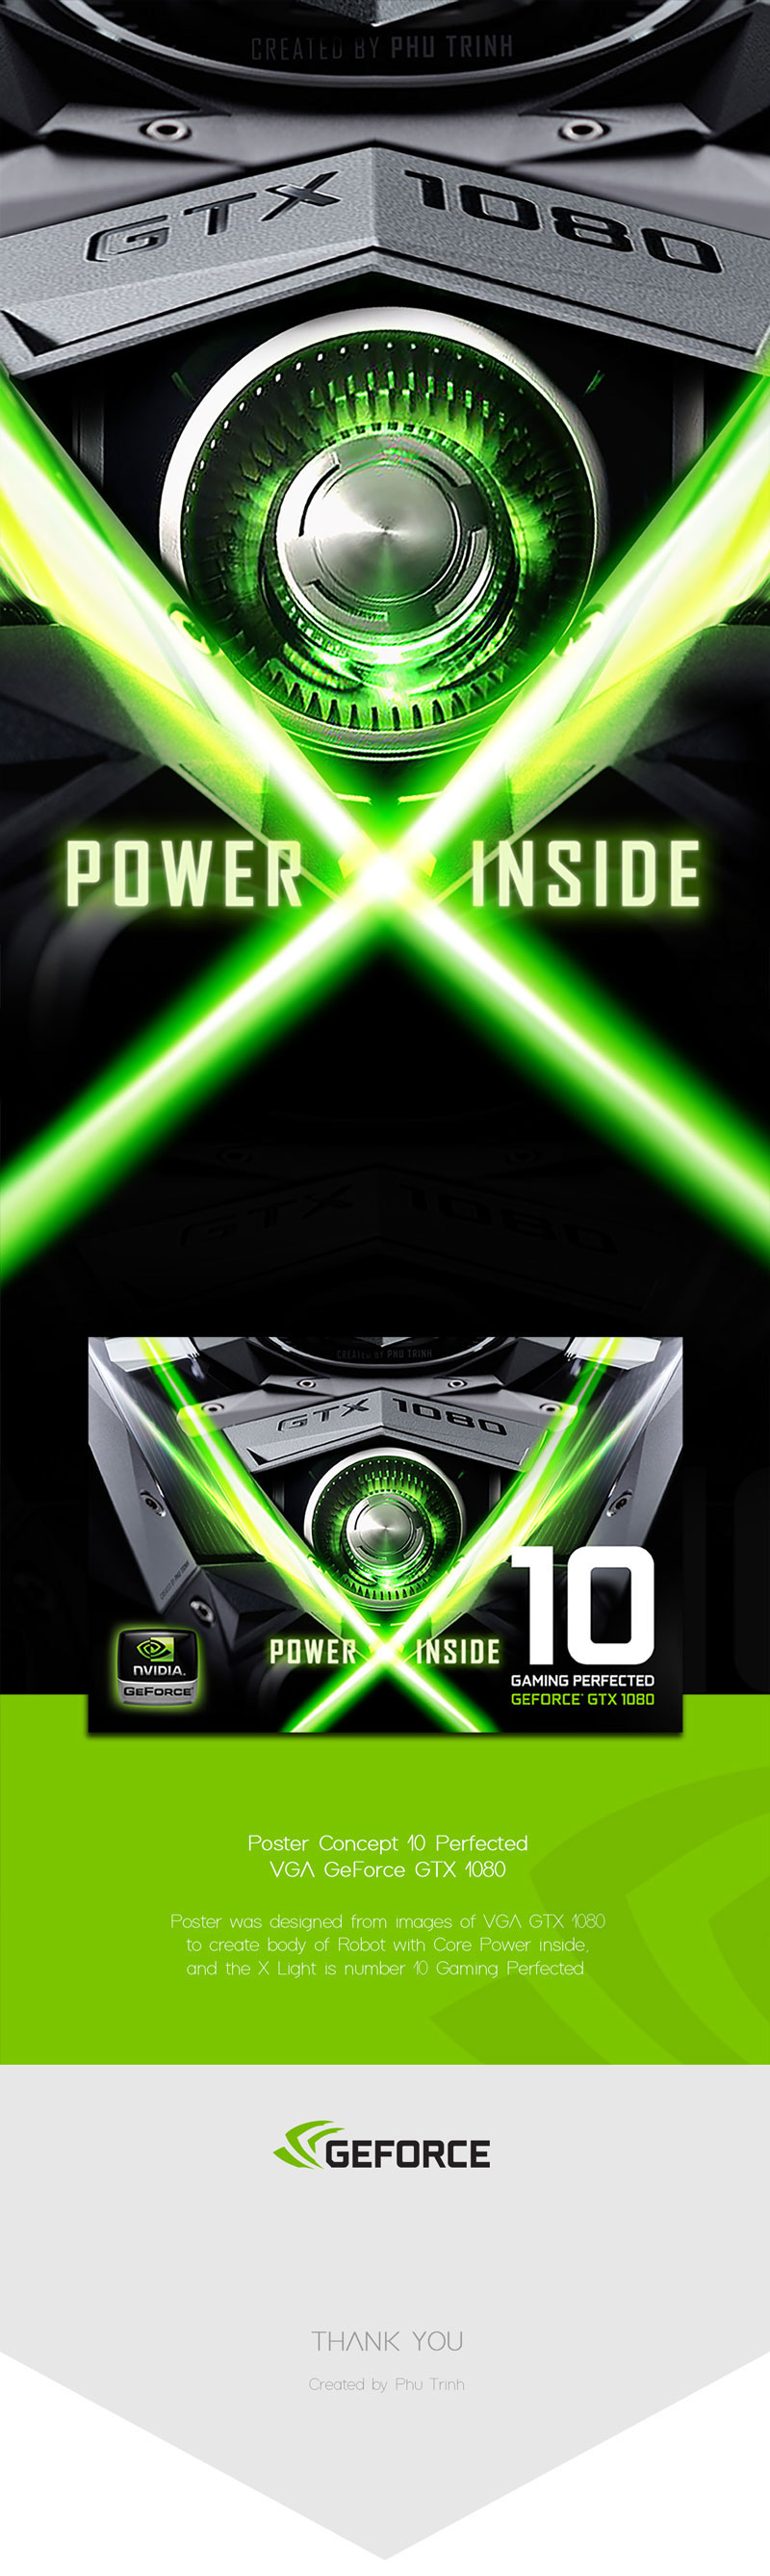 GTX 1080 NVIDIA Geforce poster RICHHUNTER